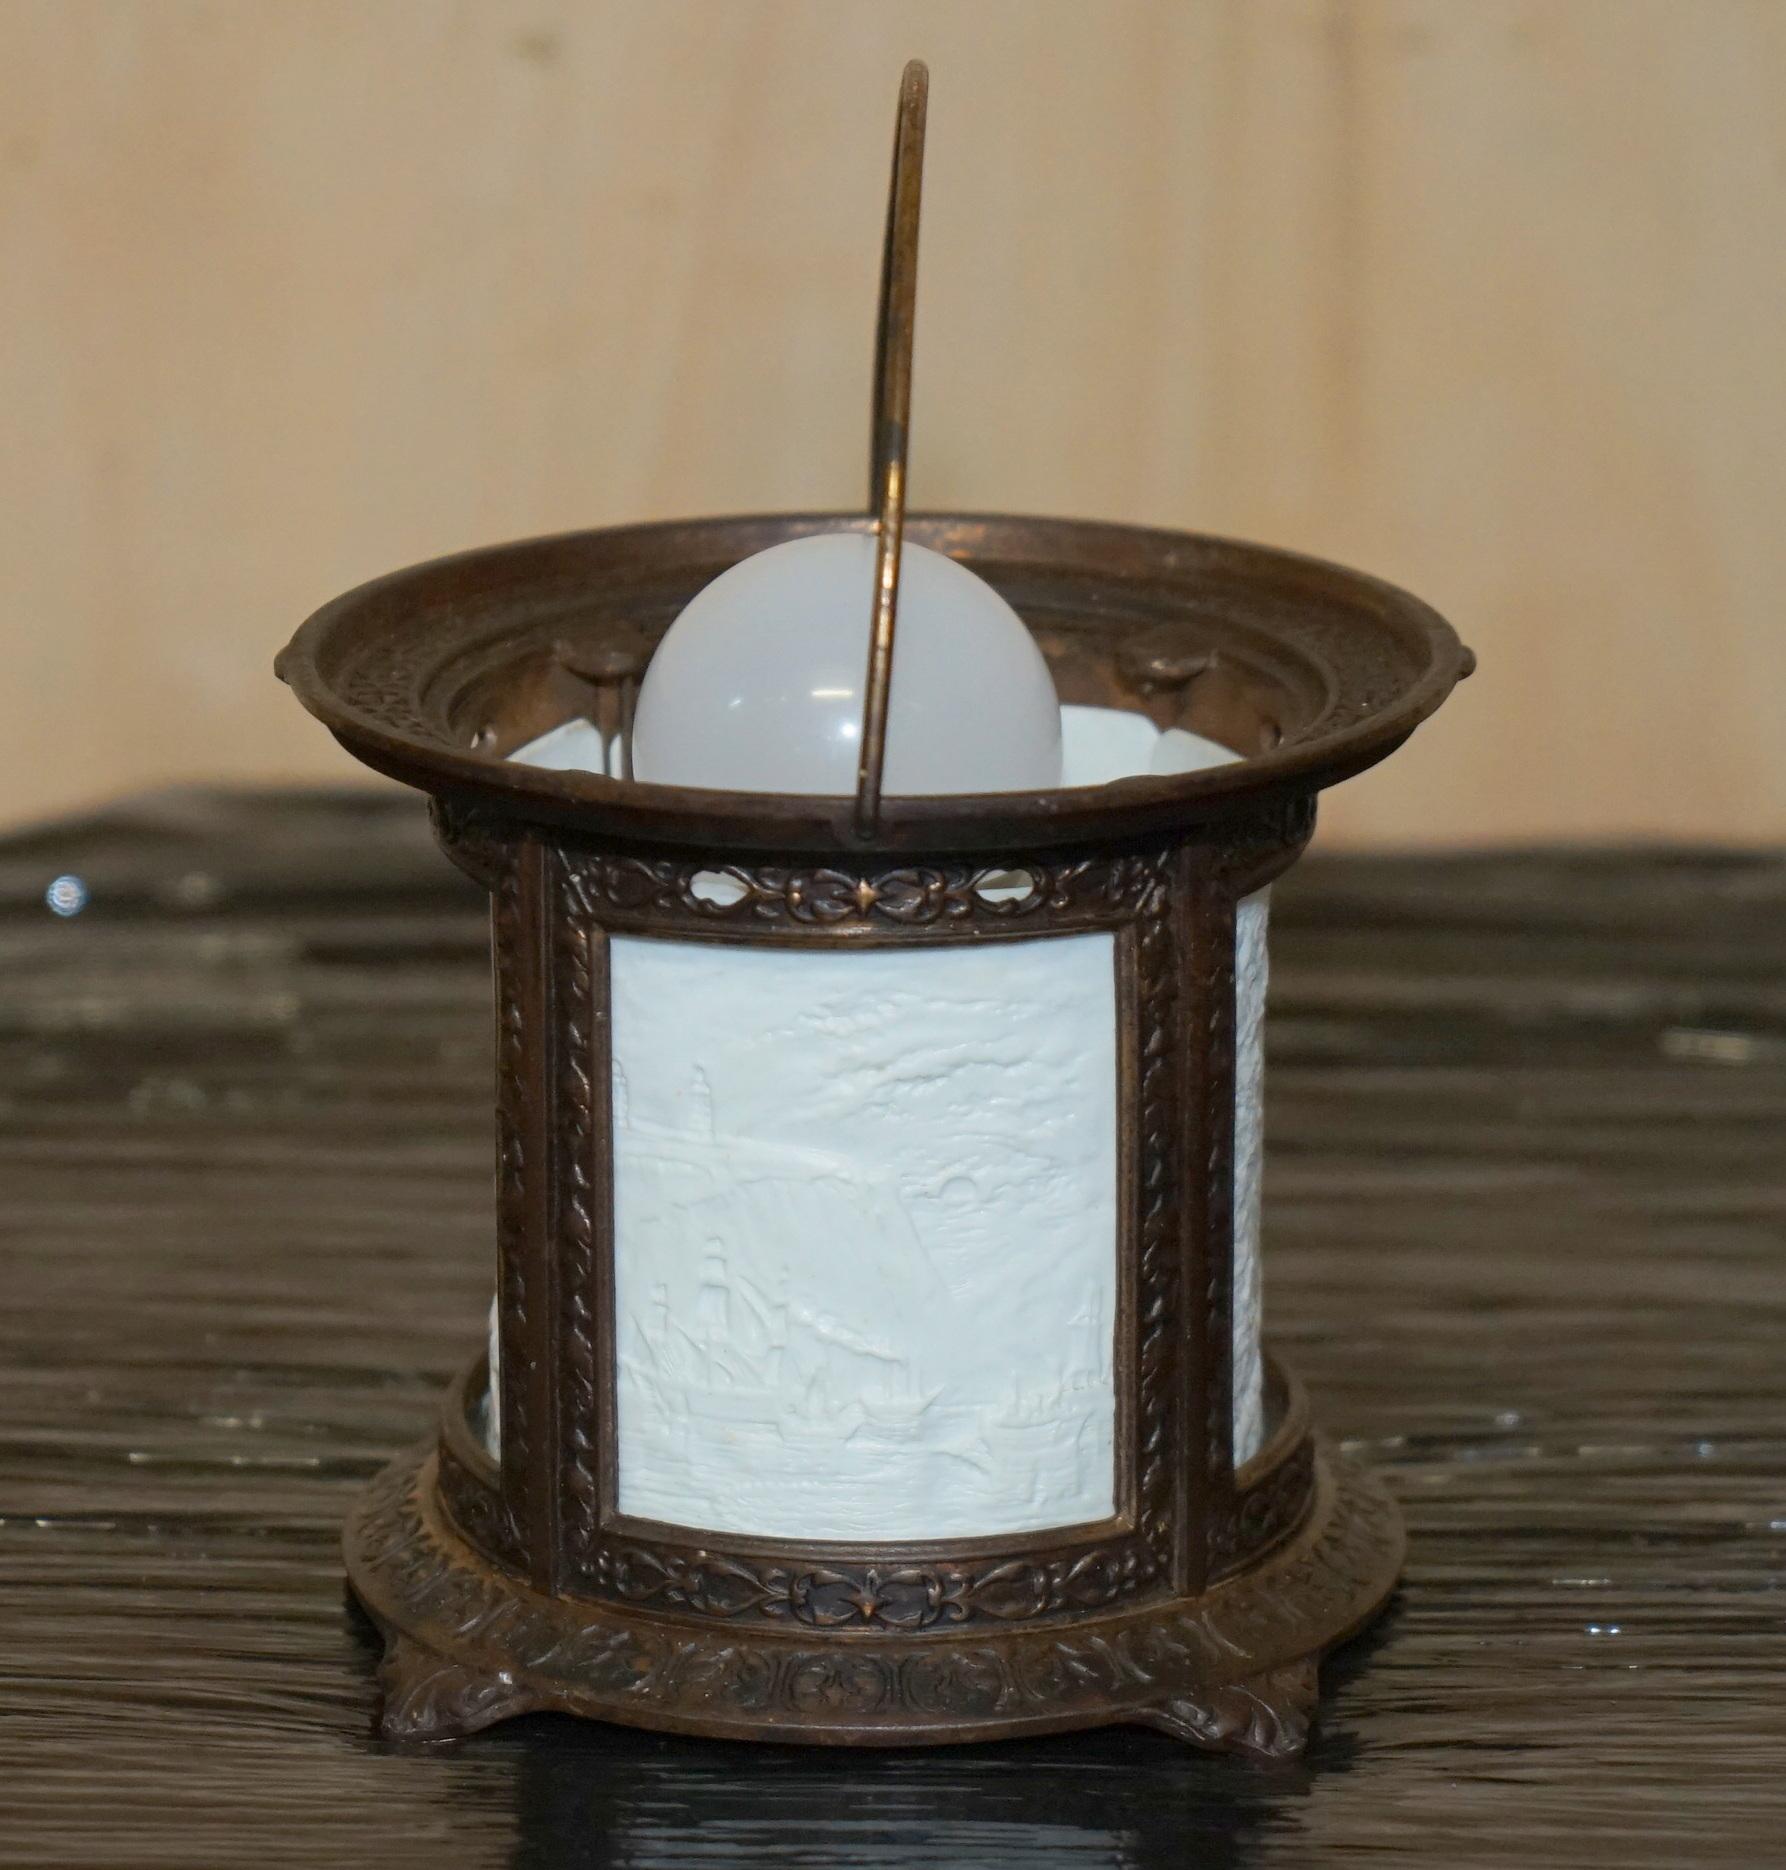 ANTIQUERoman GRAND TOUR BRONZED CANDLE LAMP RESTORED ZU USE AS A TABLE LAMp (Britisch) im Angebot